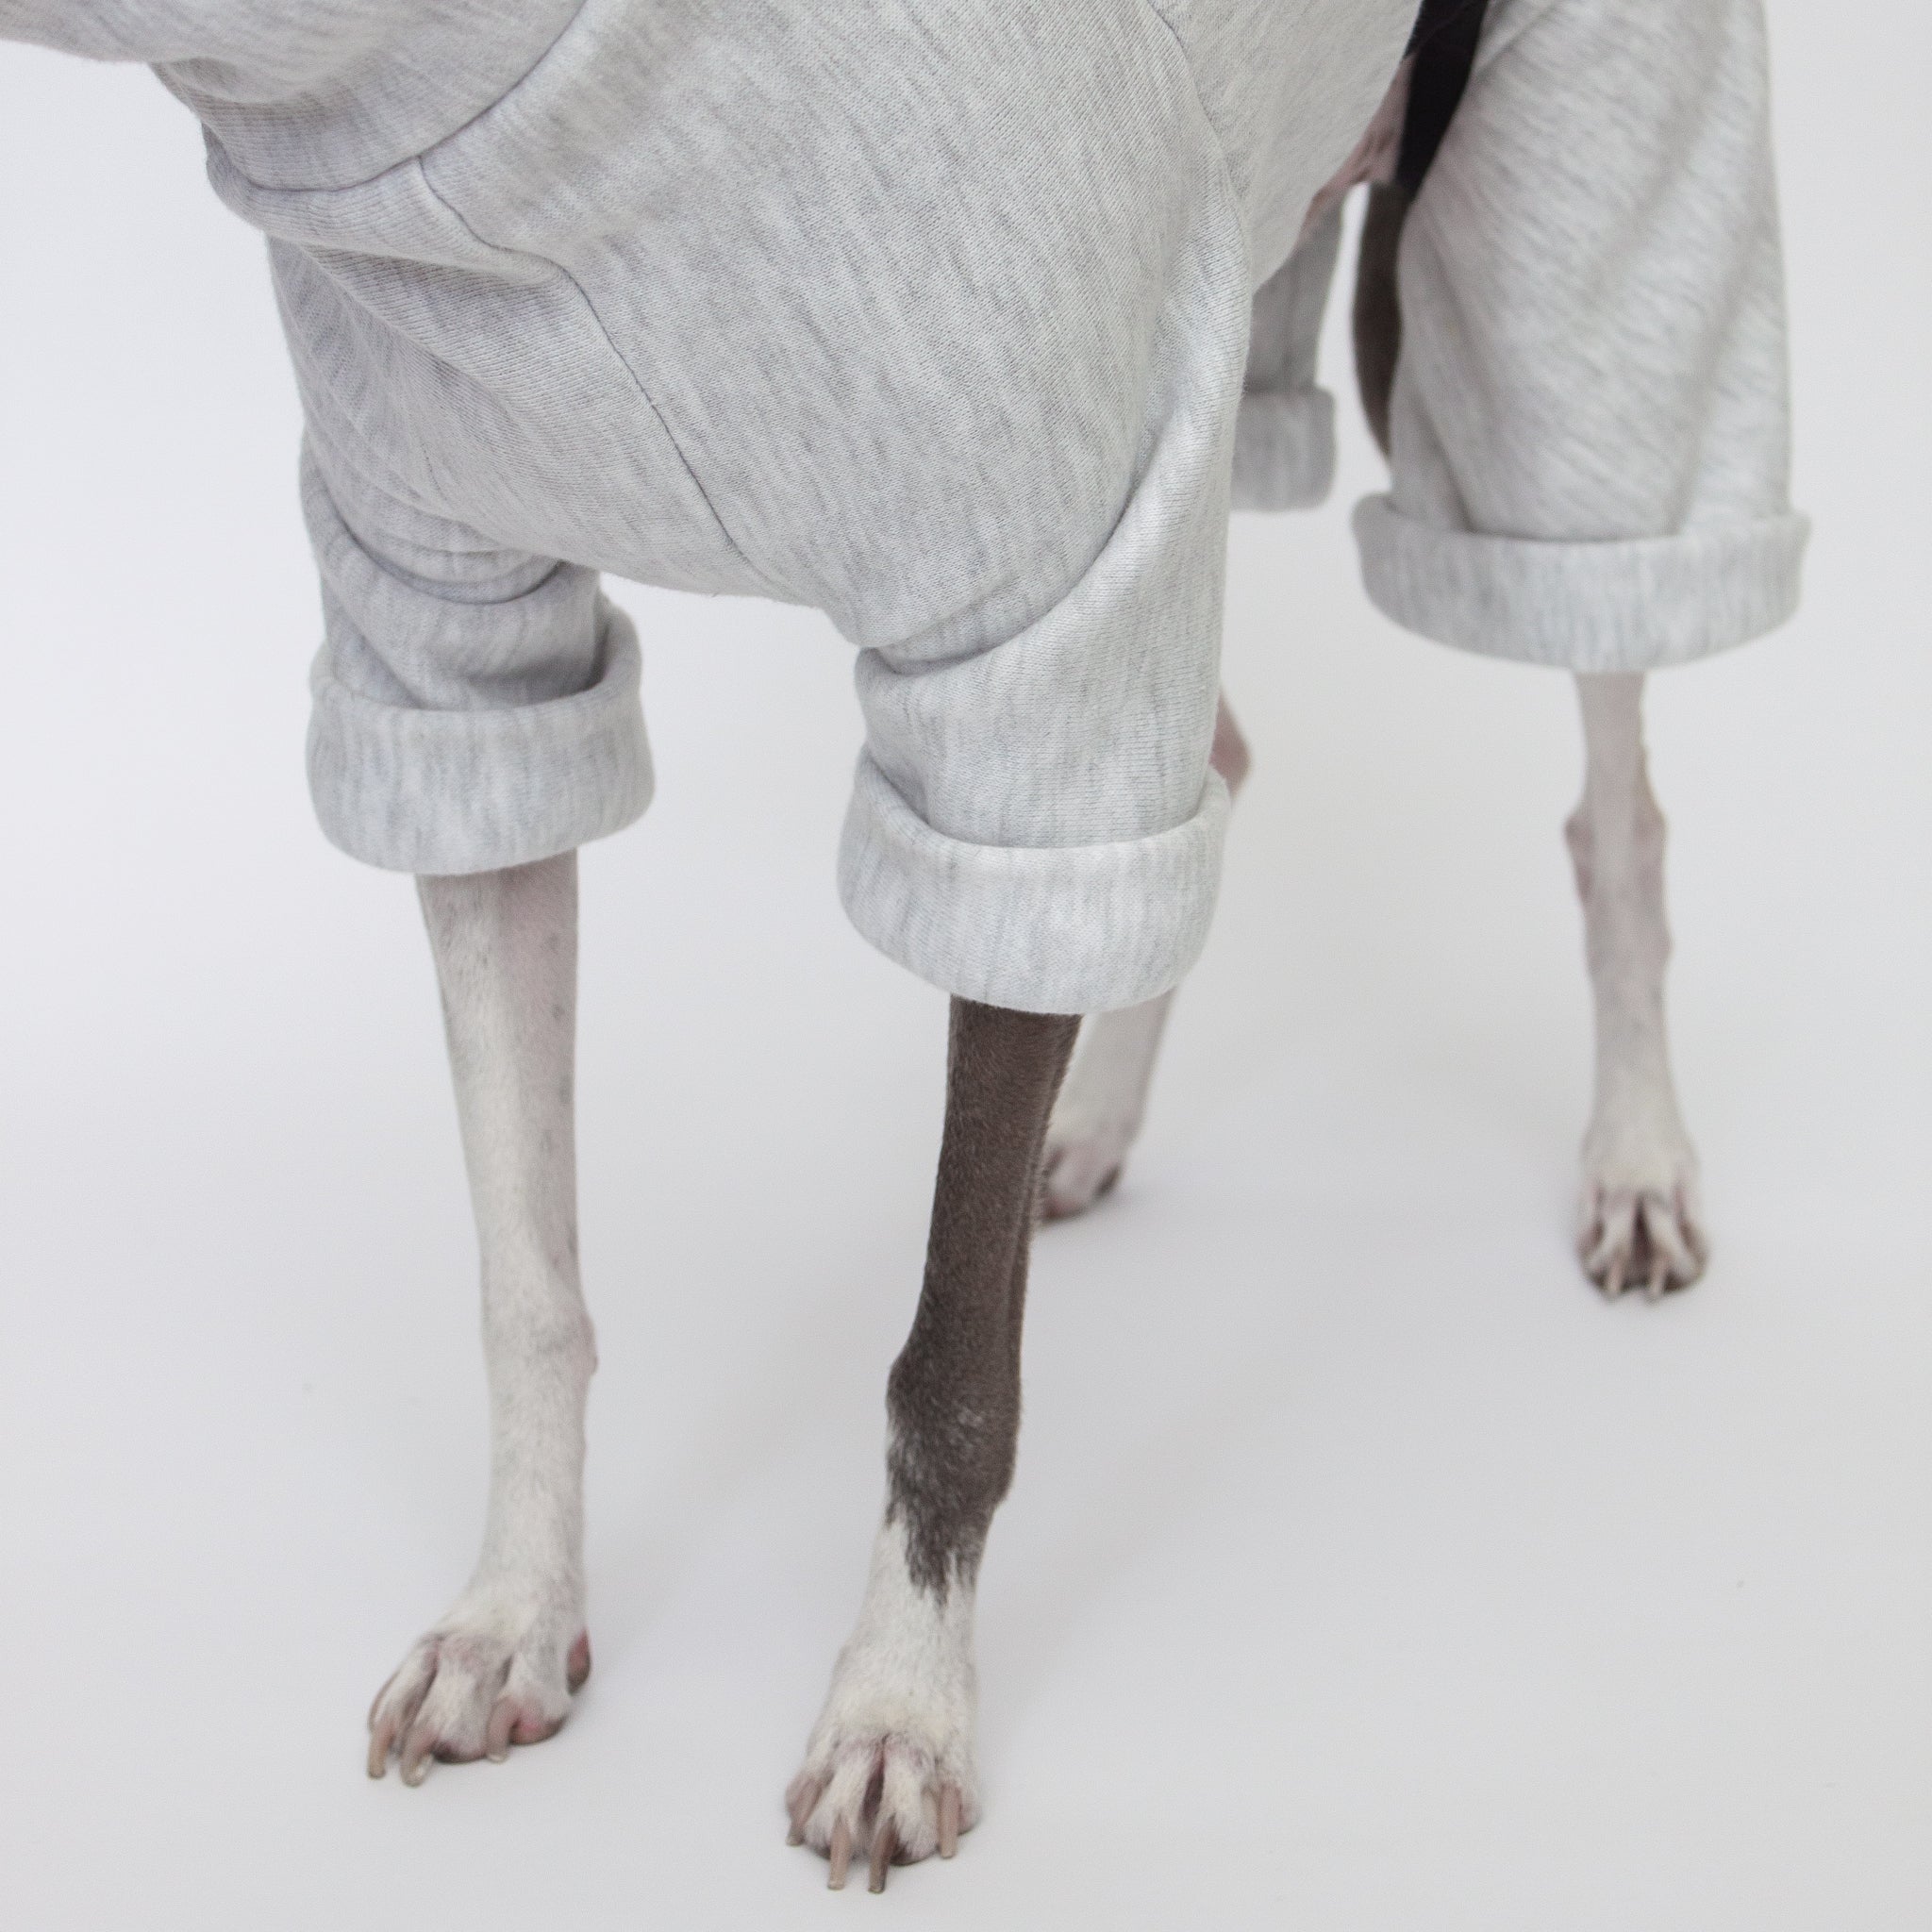 kuvfur dog pajamas tracksuit jogger grey folded cuffs